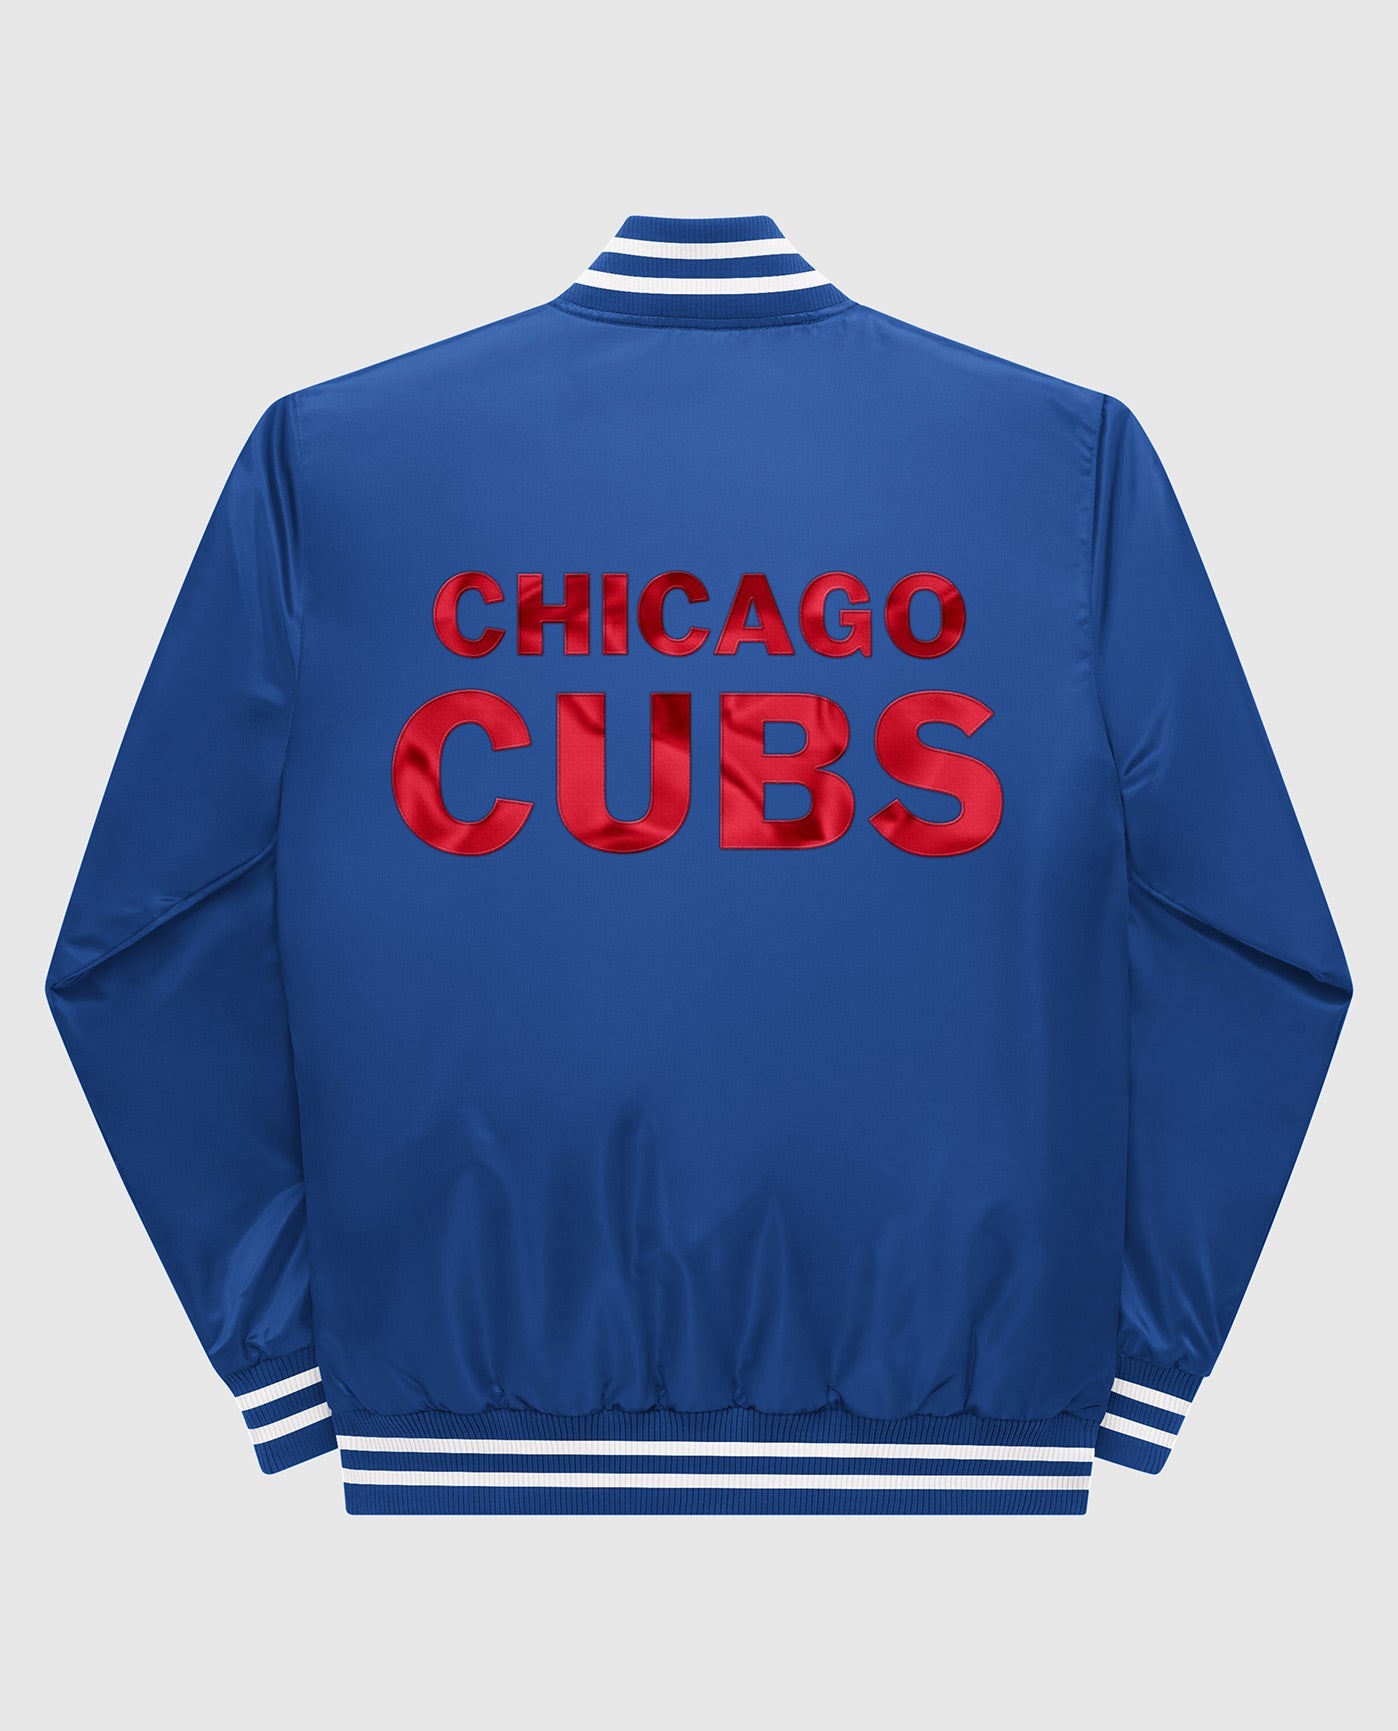 Men's Mitchell & Ness Navy Chicago Cubs Colorblocked Satin Raglan Full-Snap  Jacket